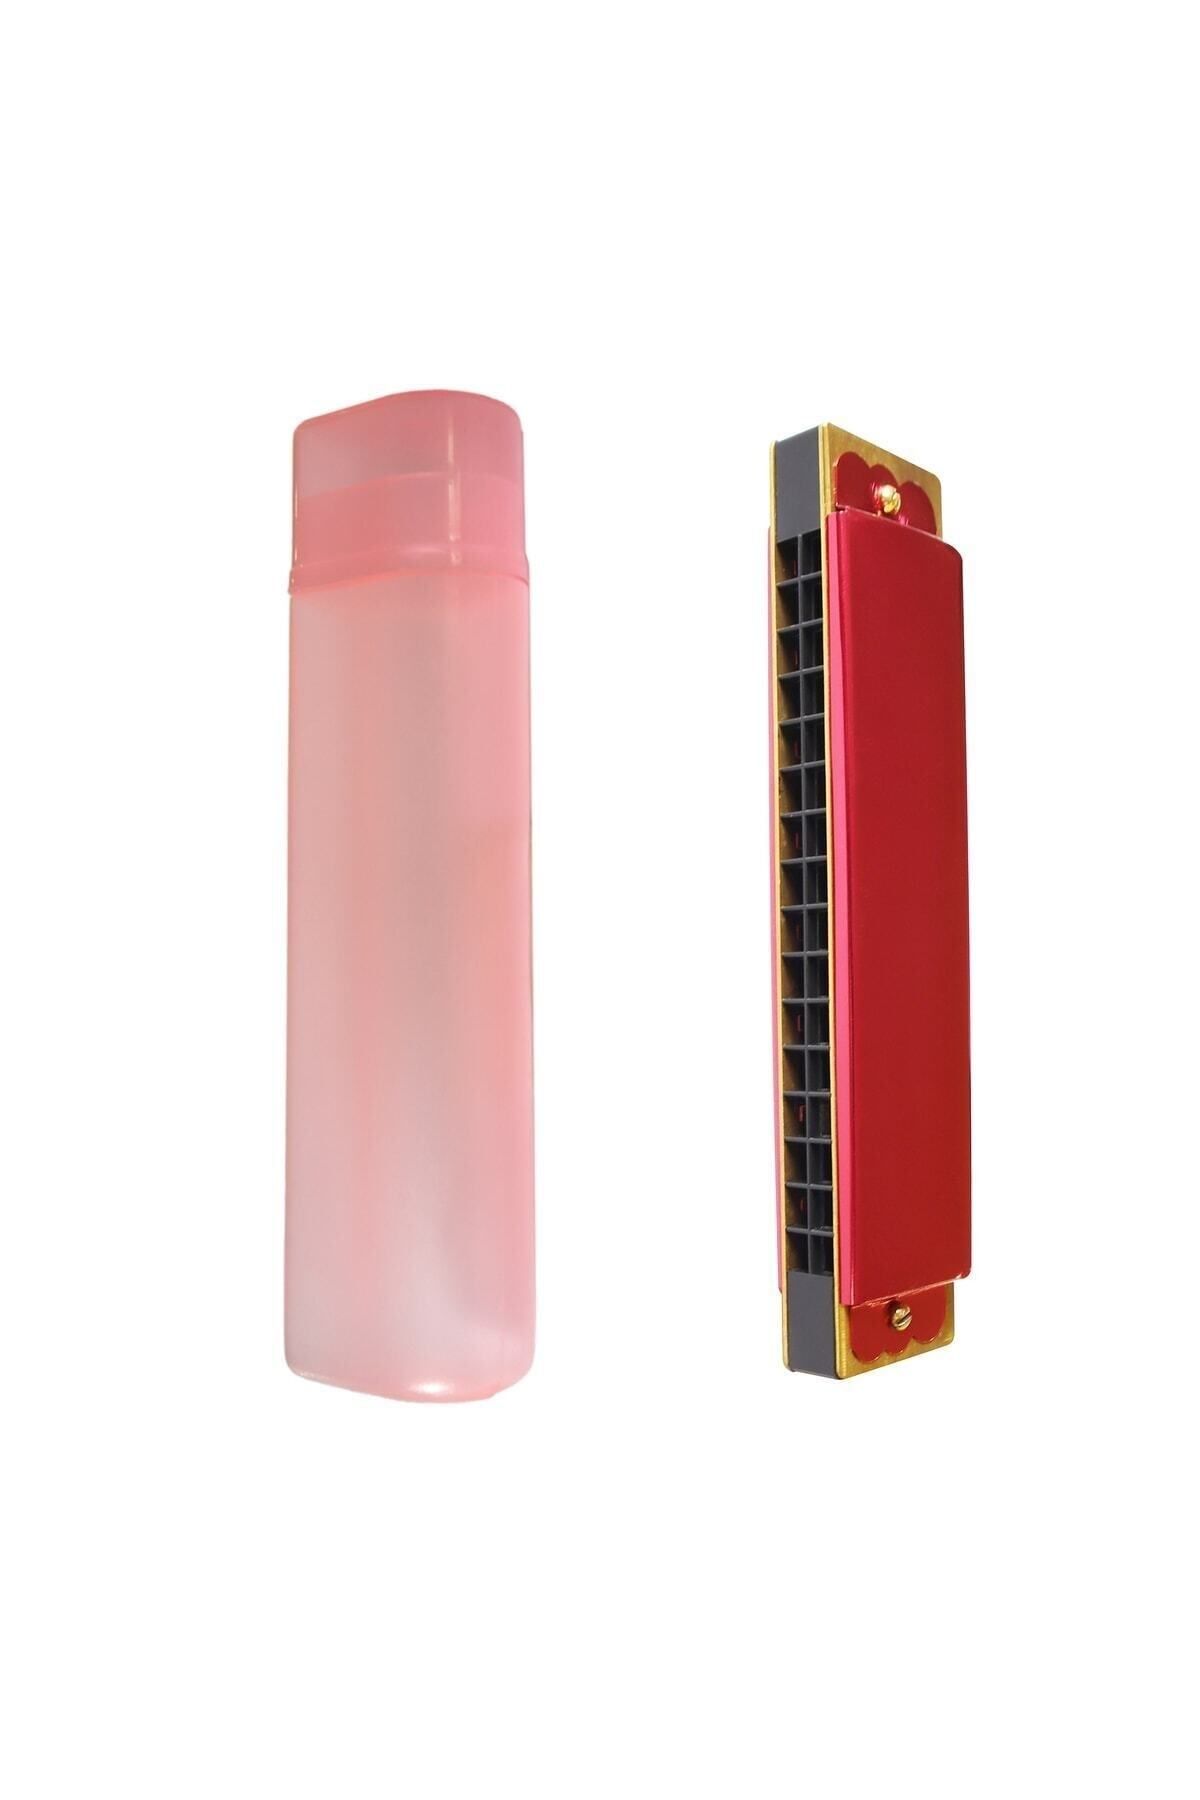 JWIN Jm-16mp 16 Delikli Mızıka (harmonica) - Kırmızı